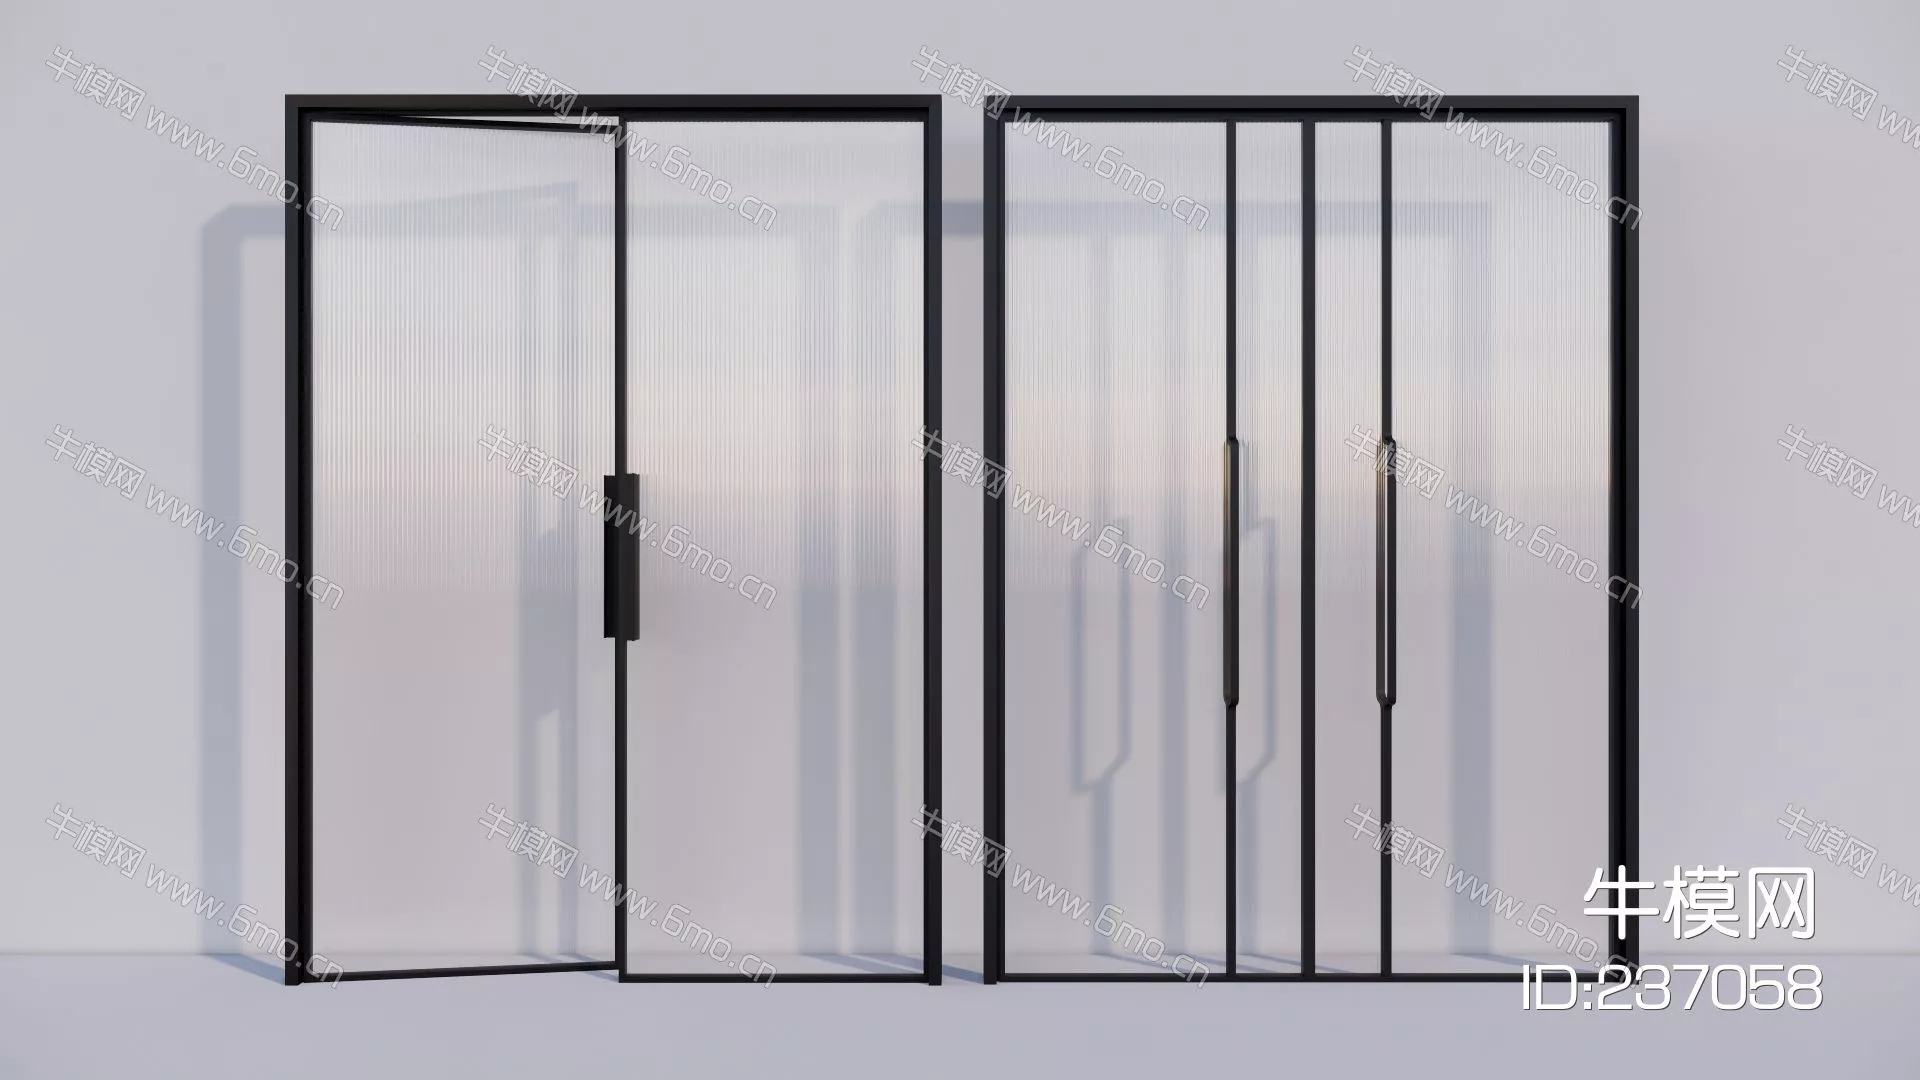 MODERN DOOR AND WINDOWS - SKETCHUP 3D MODEL - ENSCAPE - 237058